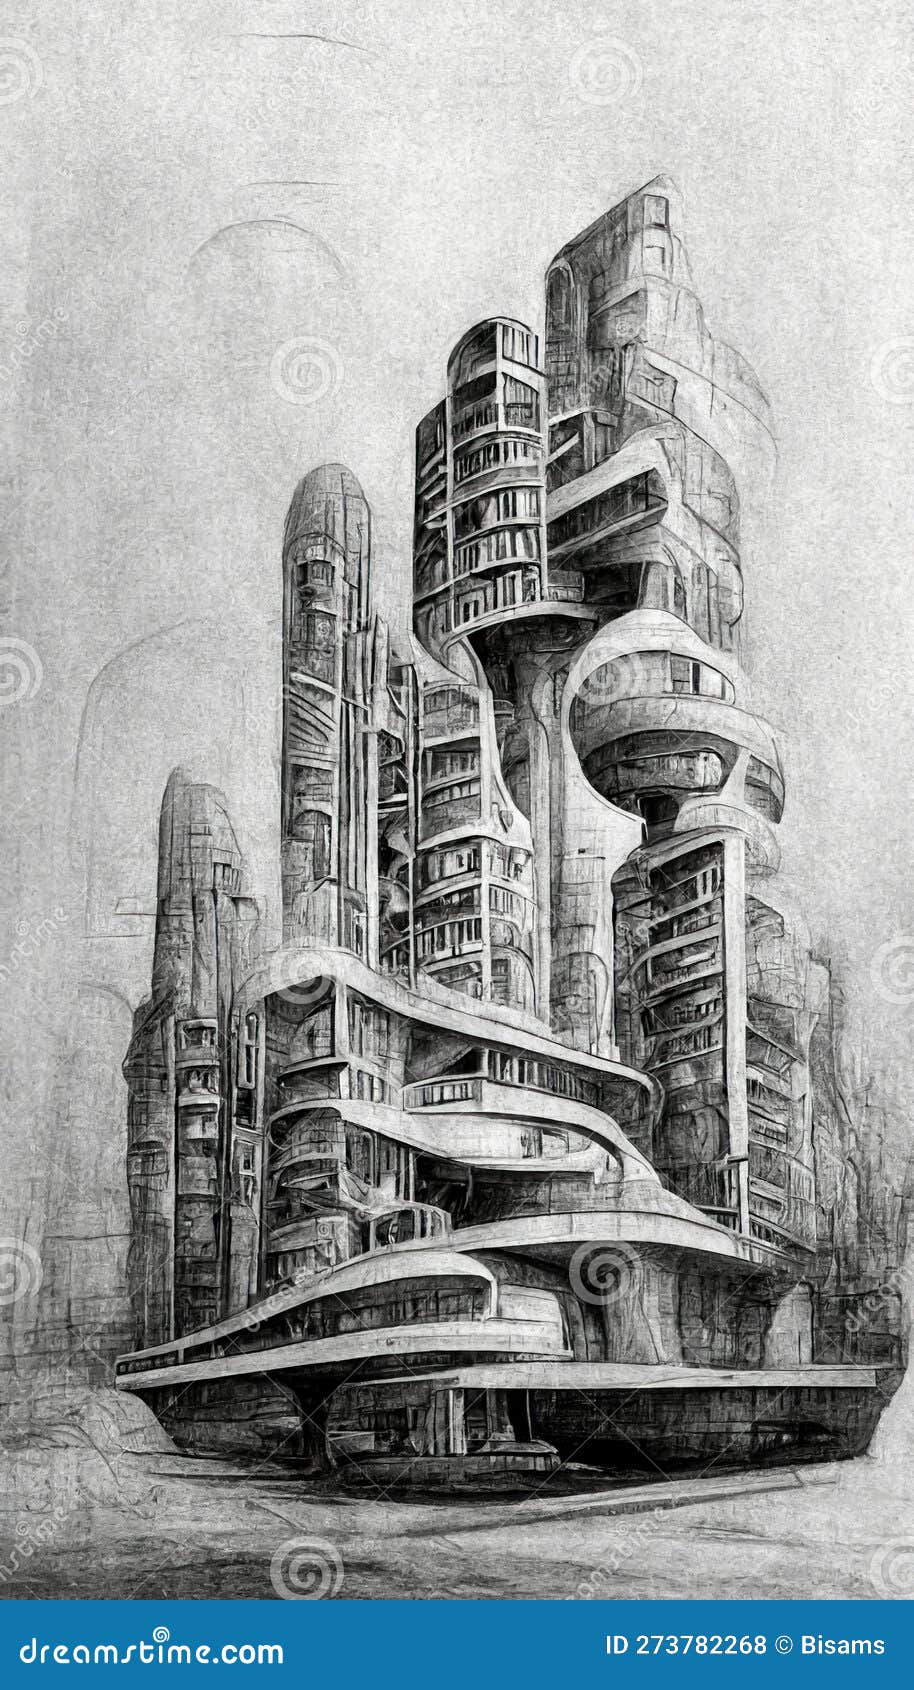 Premium Photo | Futuristic surreal urban architecture pencil drawing style  fantasy alien city 3d illustration